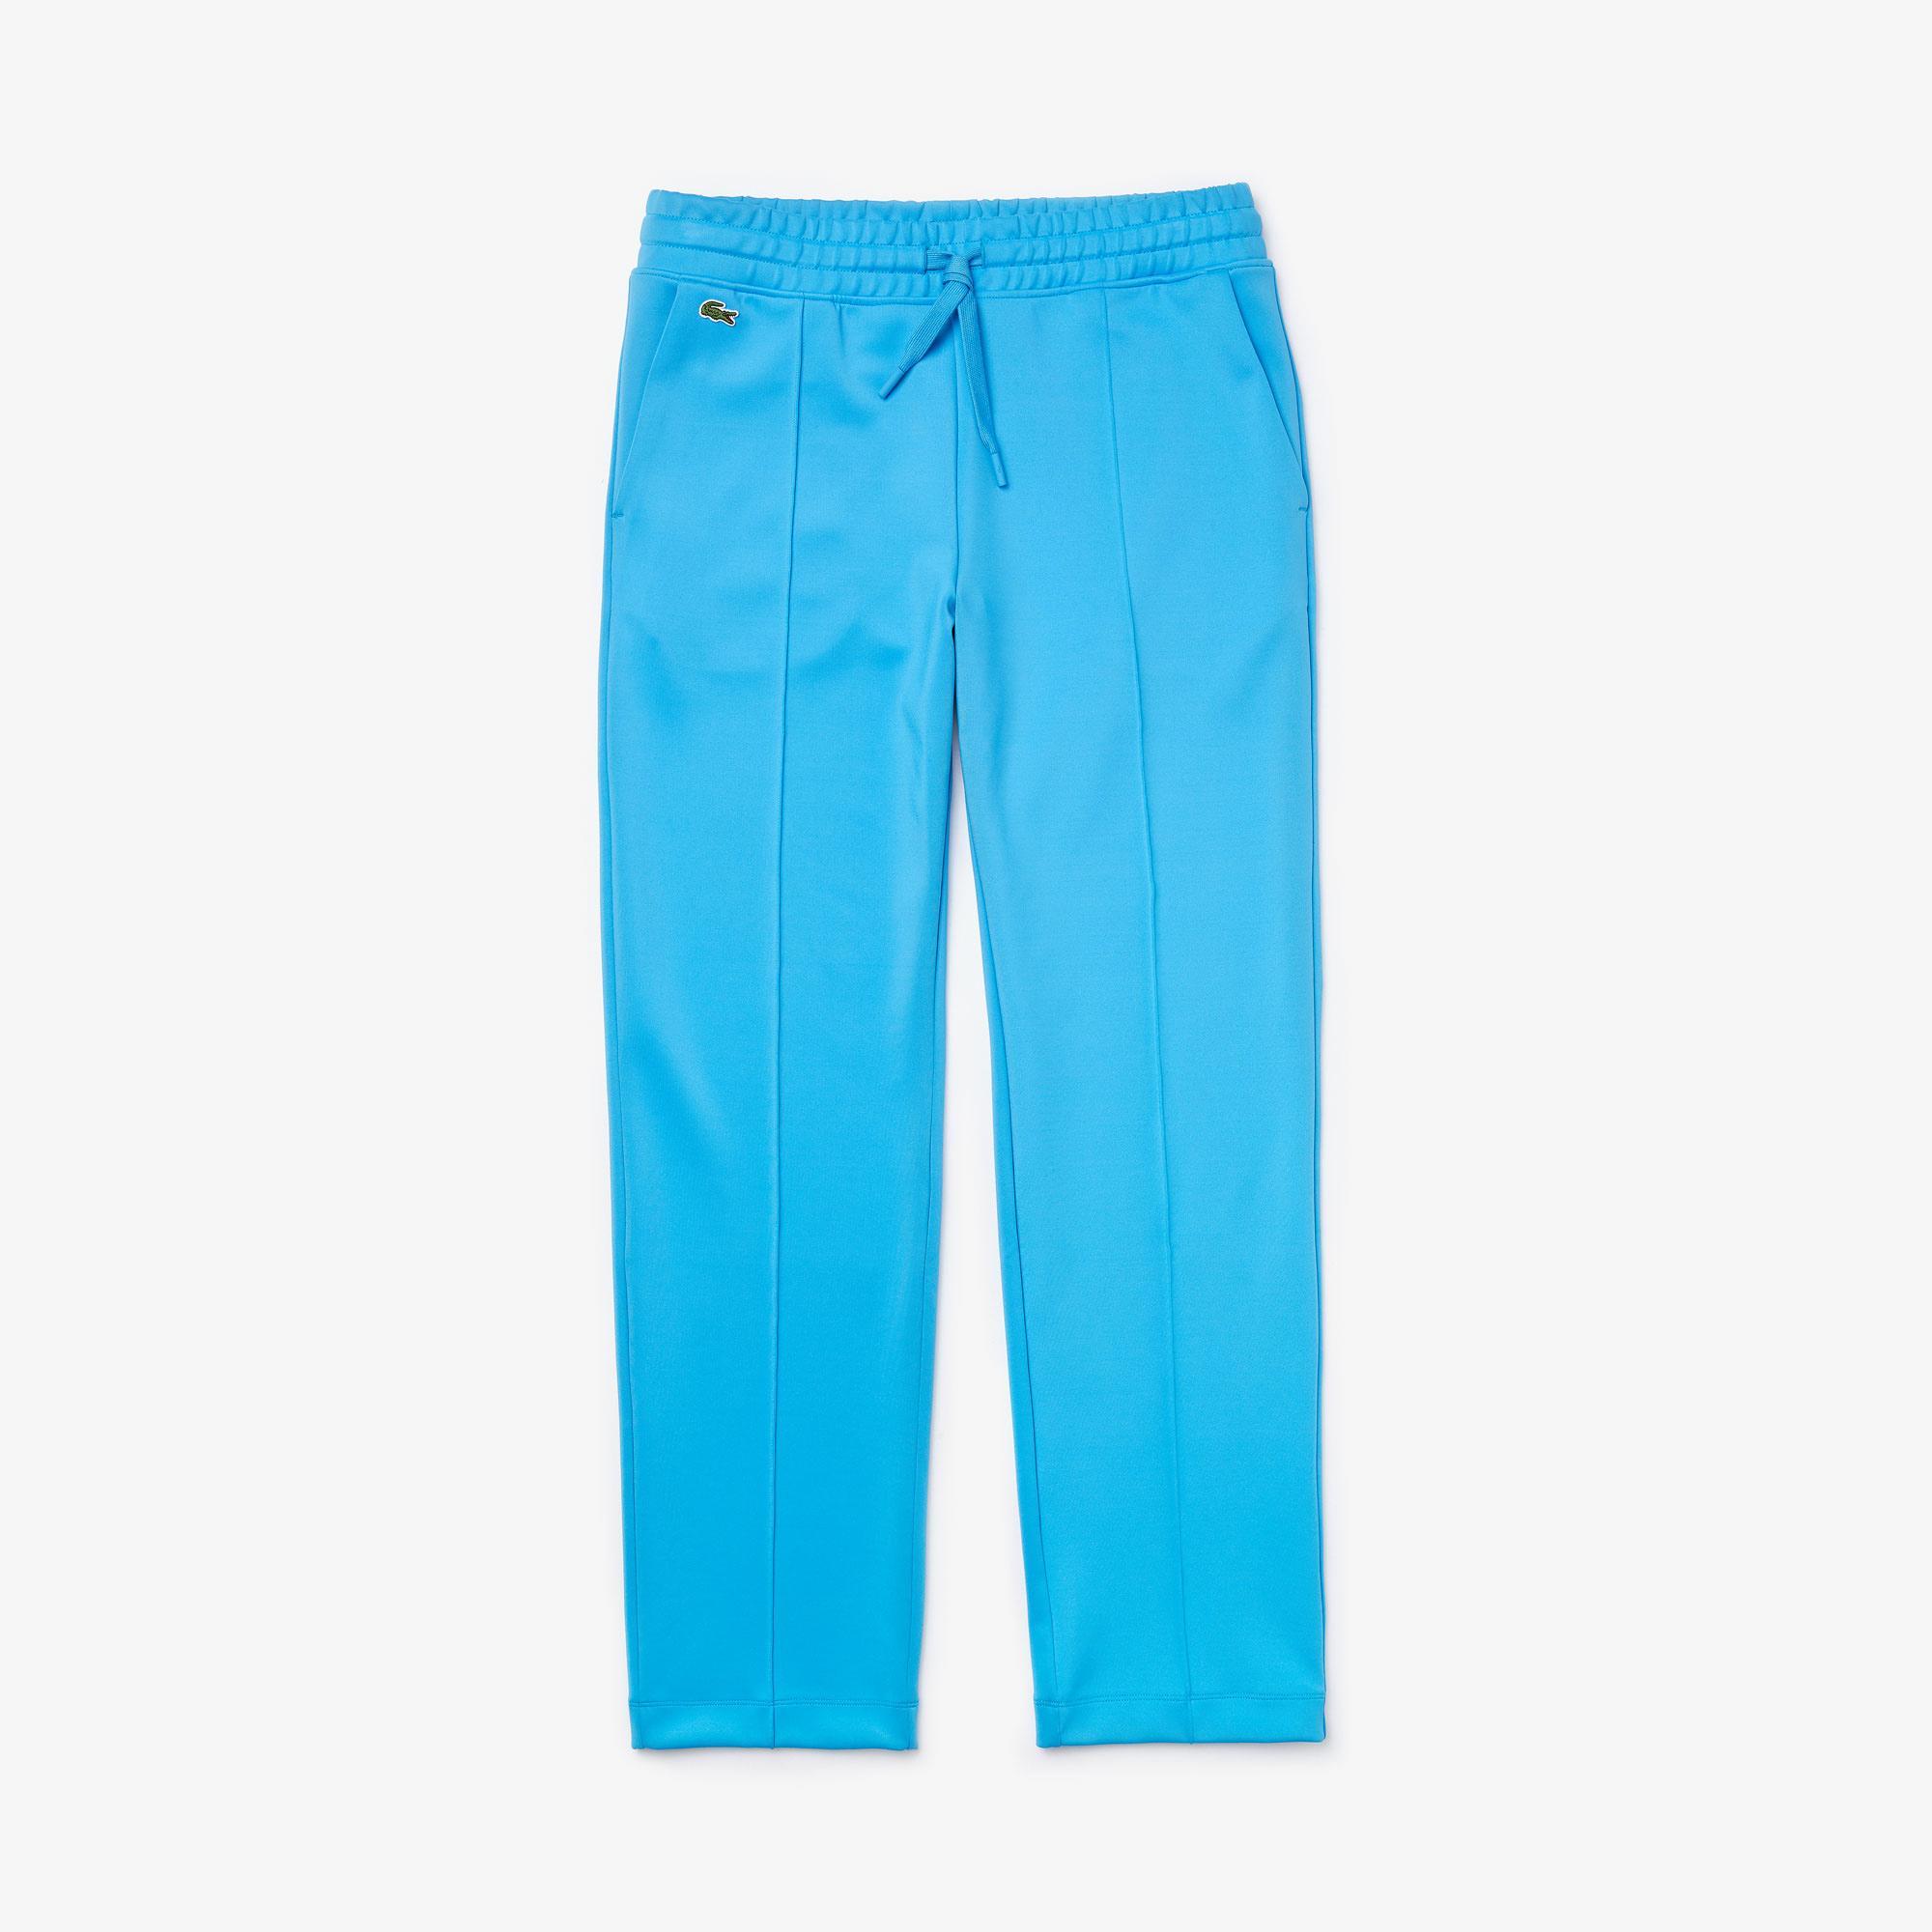 Lacoste Kadın Mavi Pantolon. 2